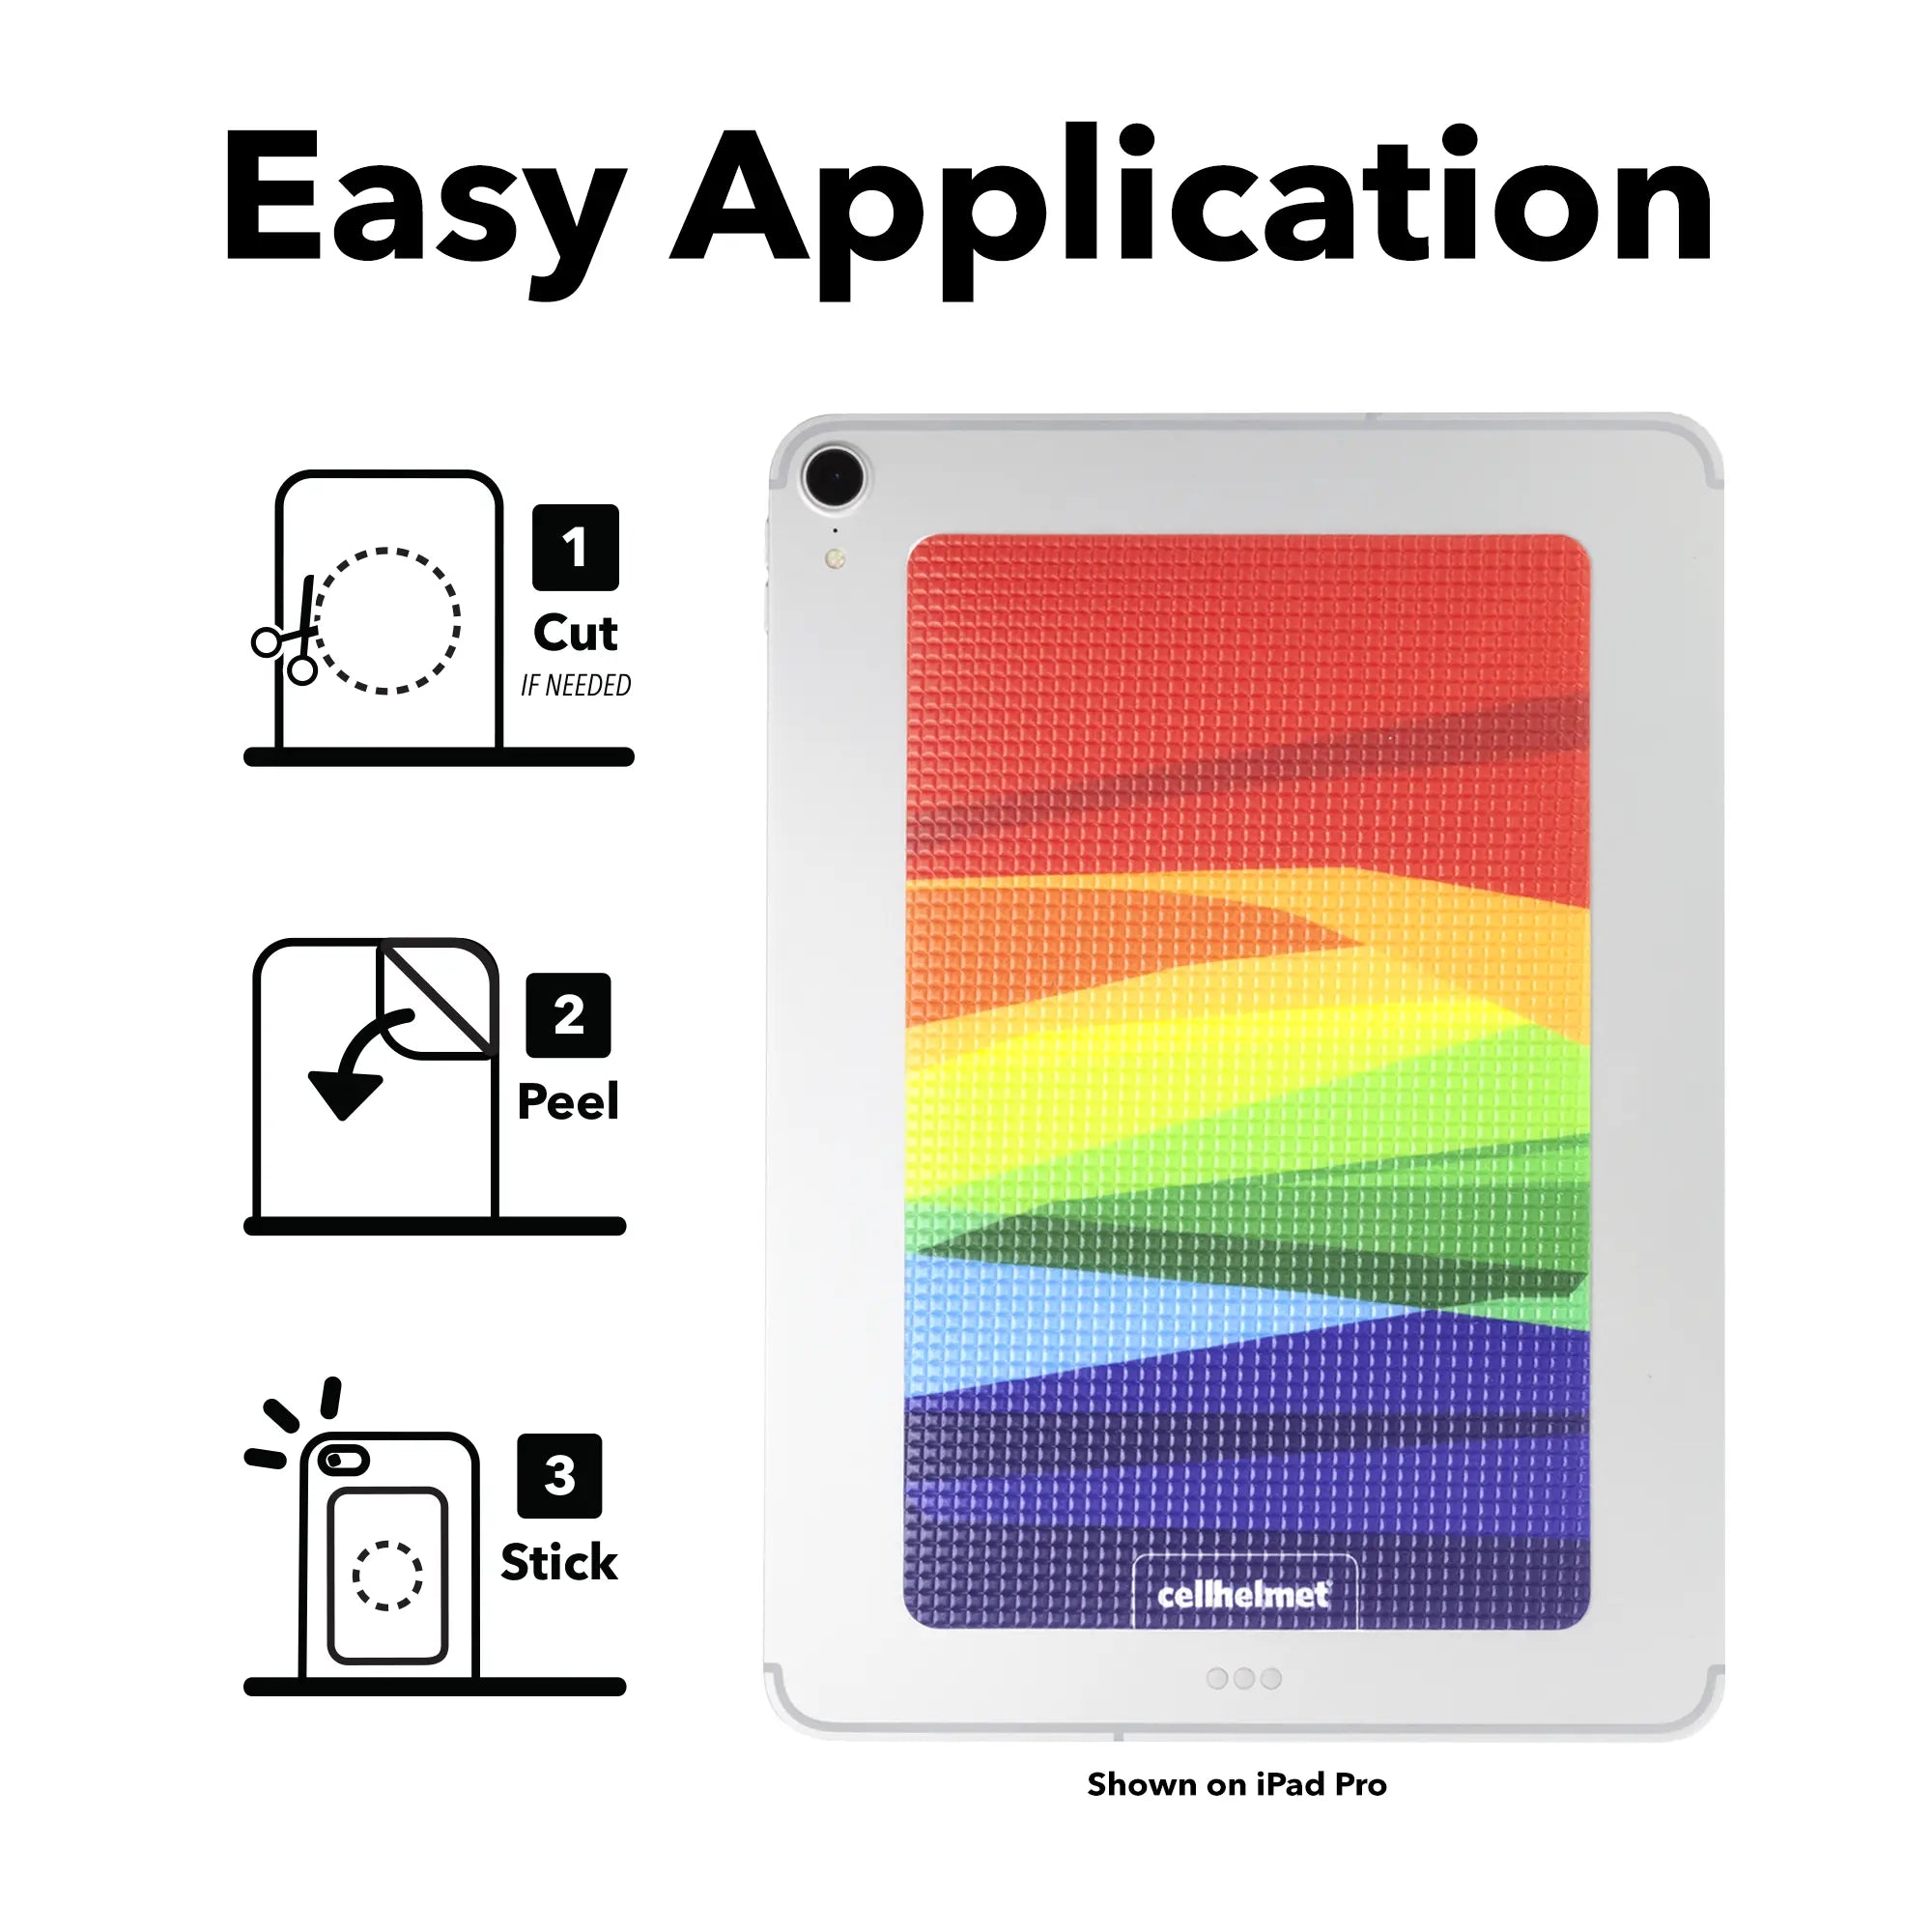 tackbacks Over the Rainbow Tablet -  -  - cellhelmet